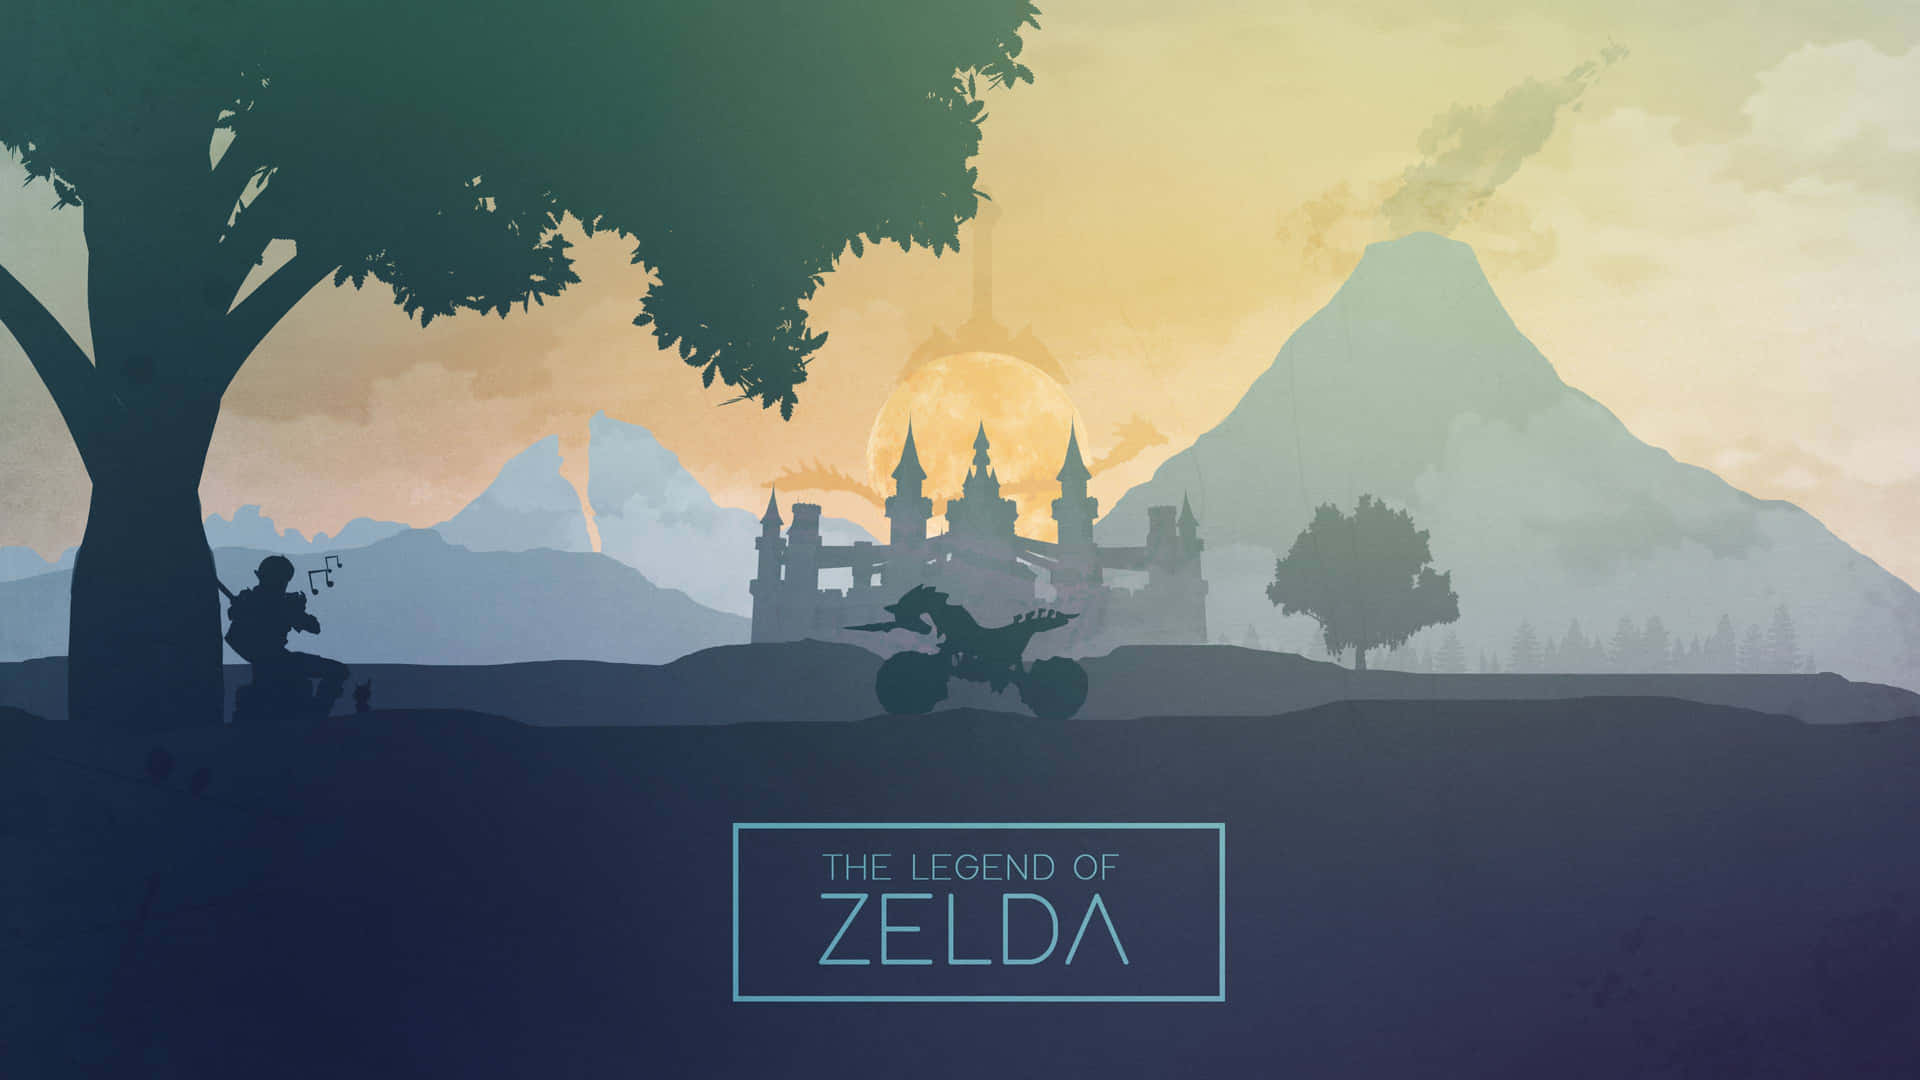 The Legend of Zelda: Breath of the Wild Scenic Landscape